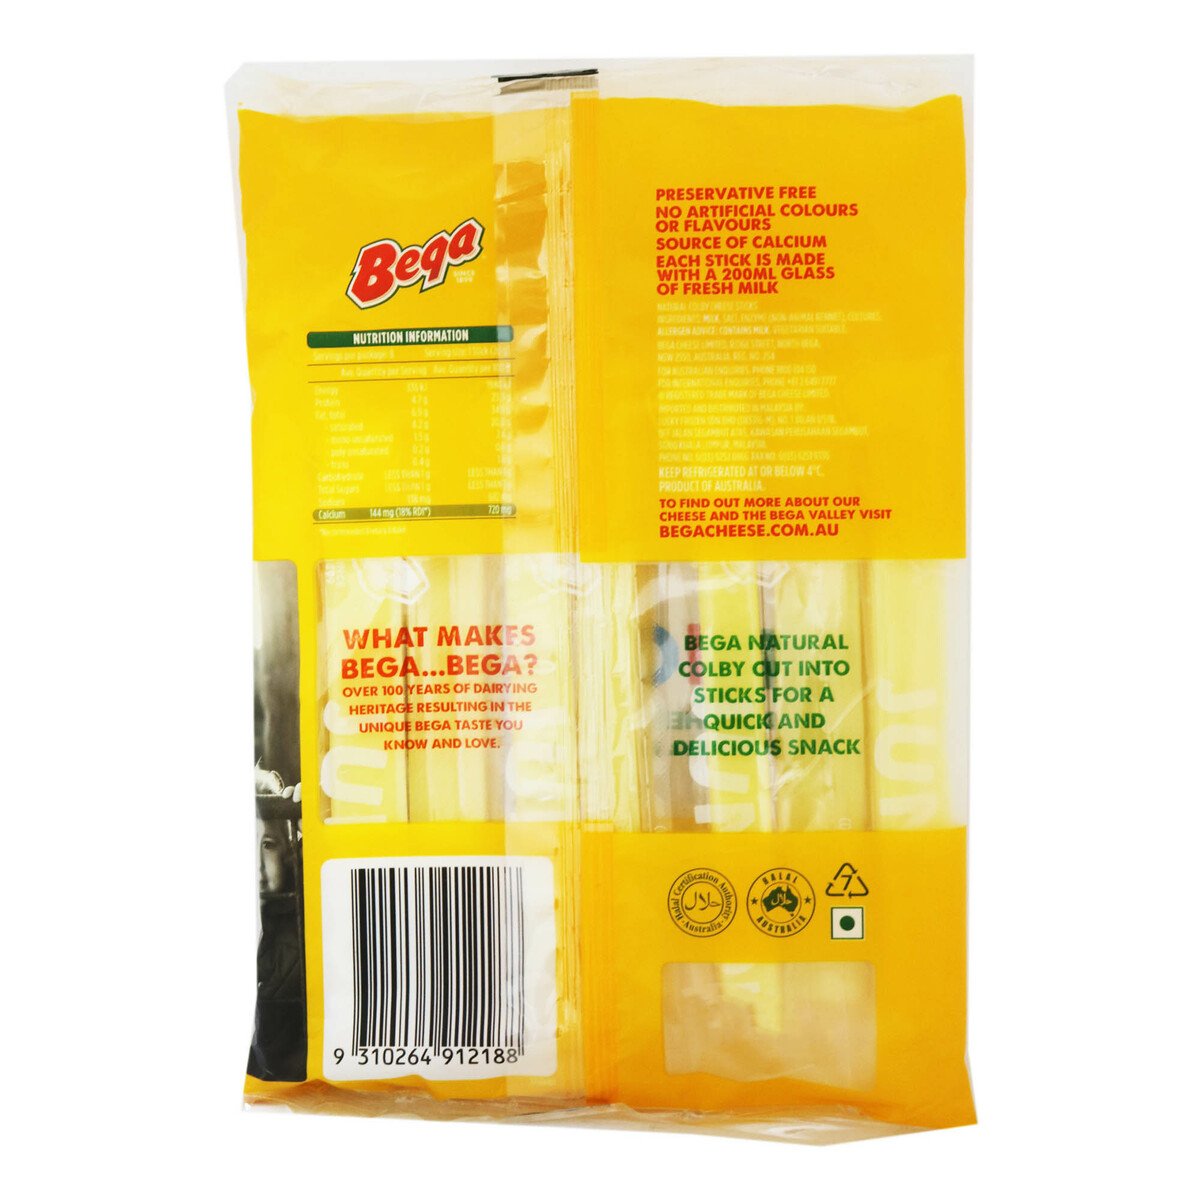 Bega Junior Natural Cheese Sticks 160g